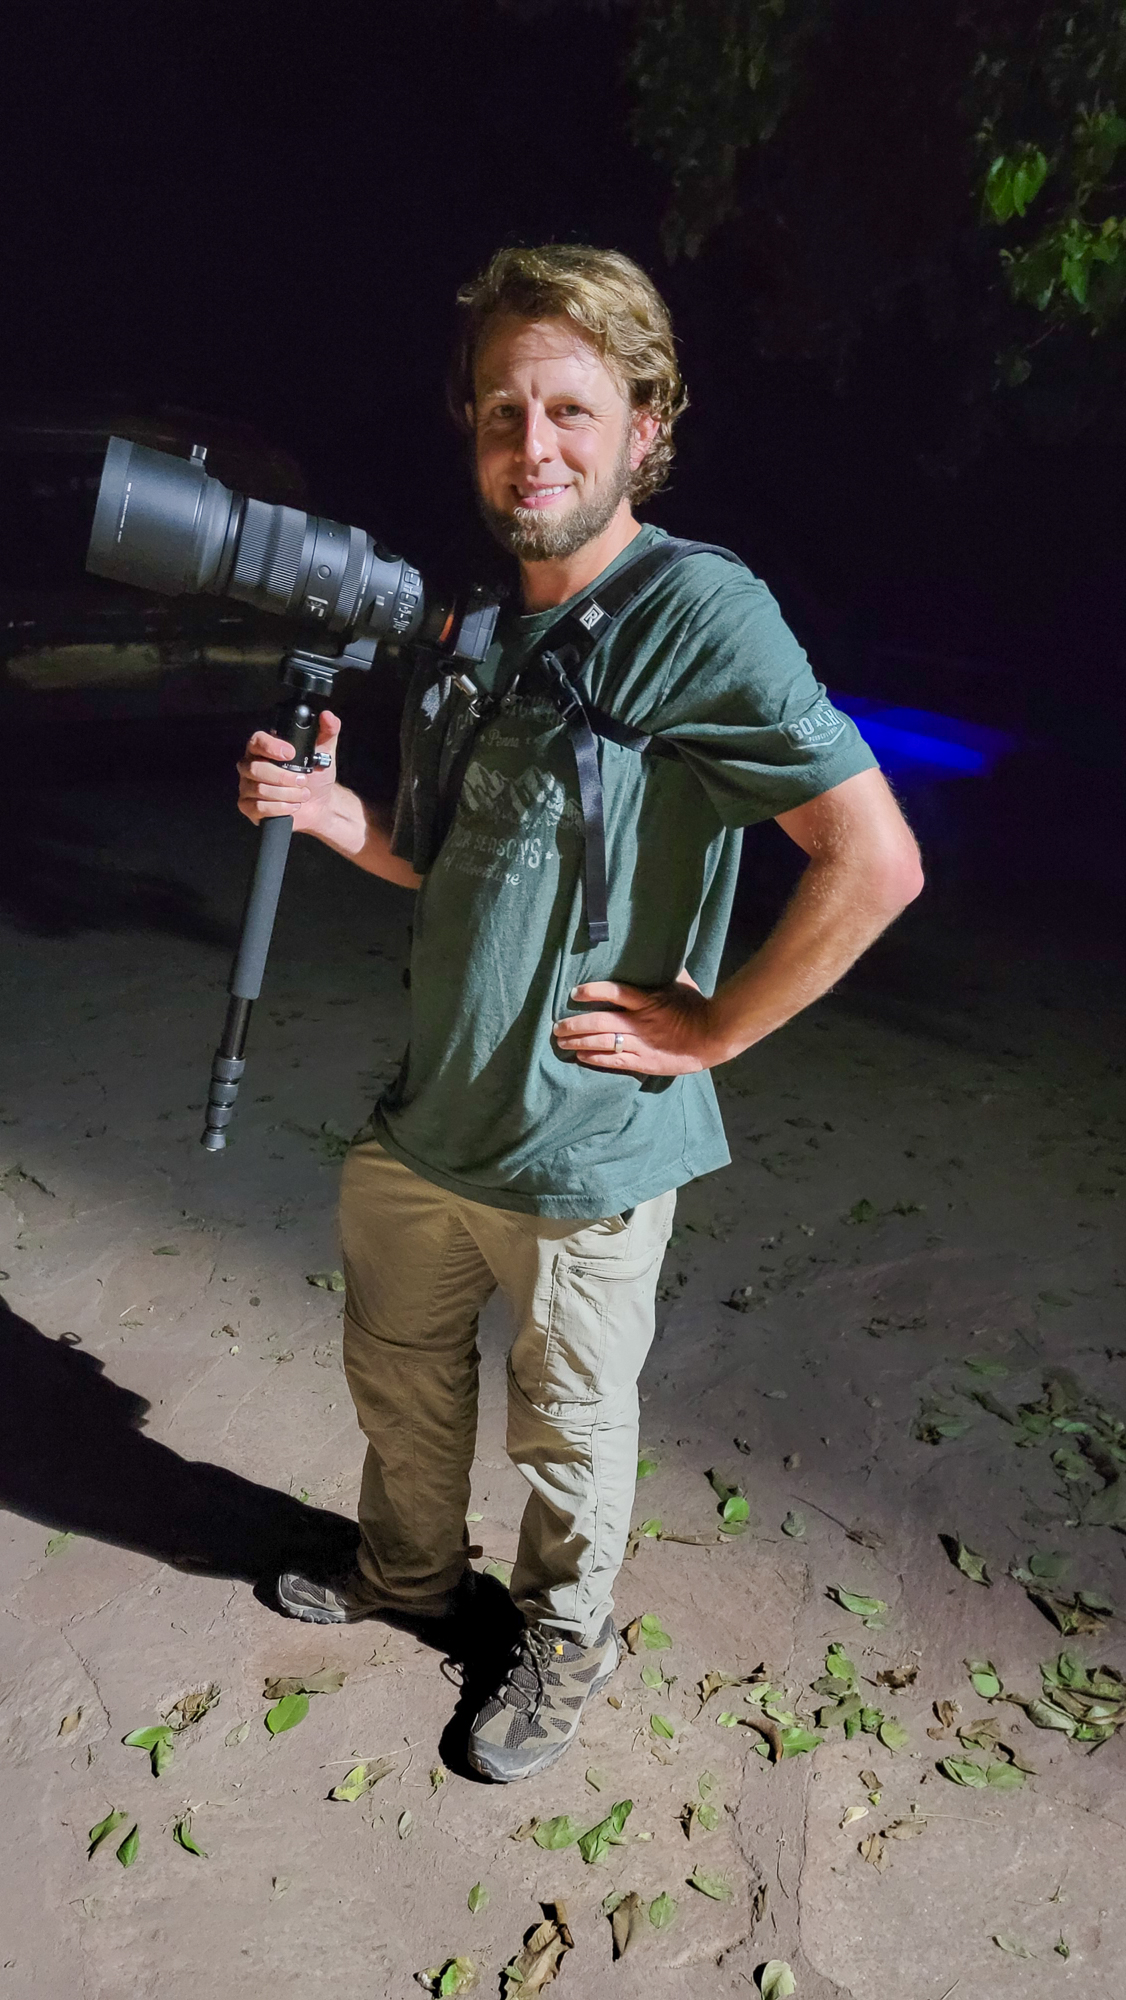 Monopod for Night Safari